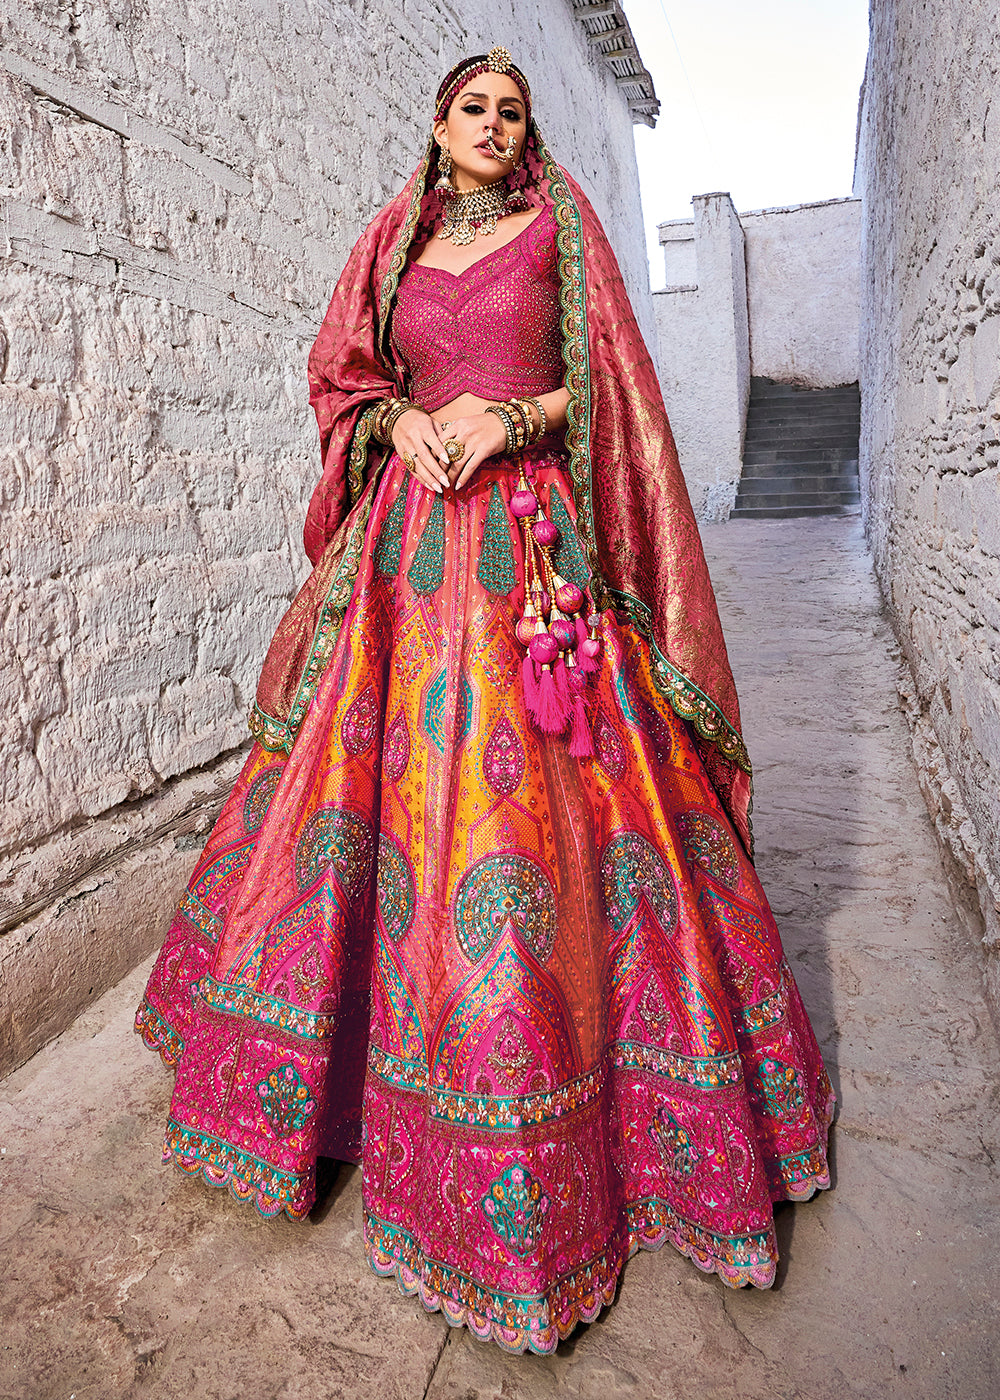 Buy Now Rani Pink Designer Style Embroidered Traditional Lehenga Choli Online in USA, UK, Canada & Worldwide at Empress Clothing.